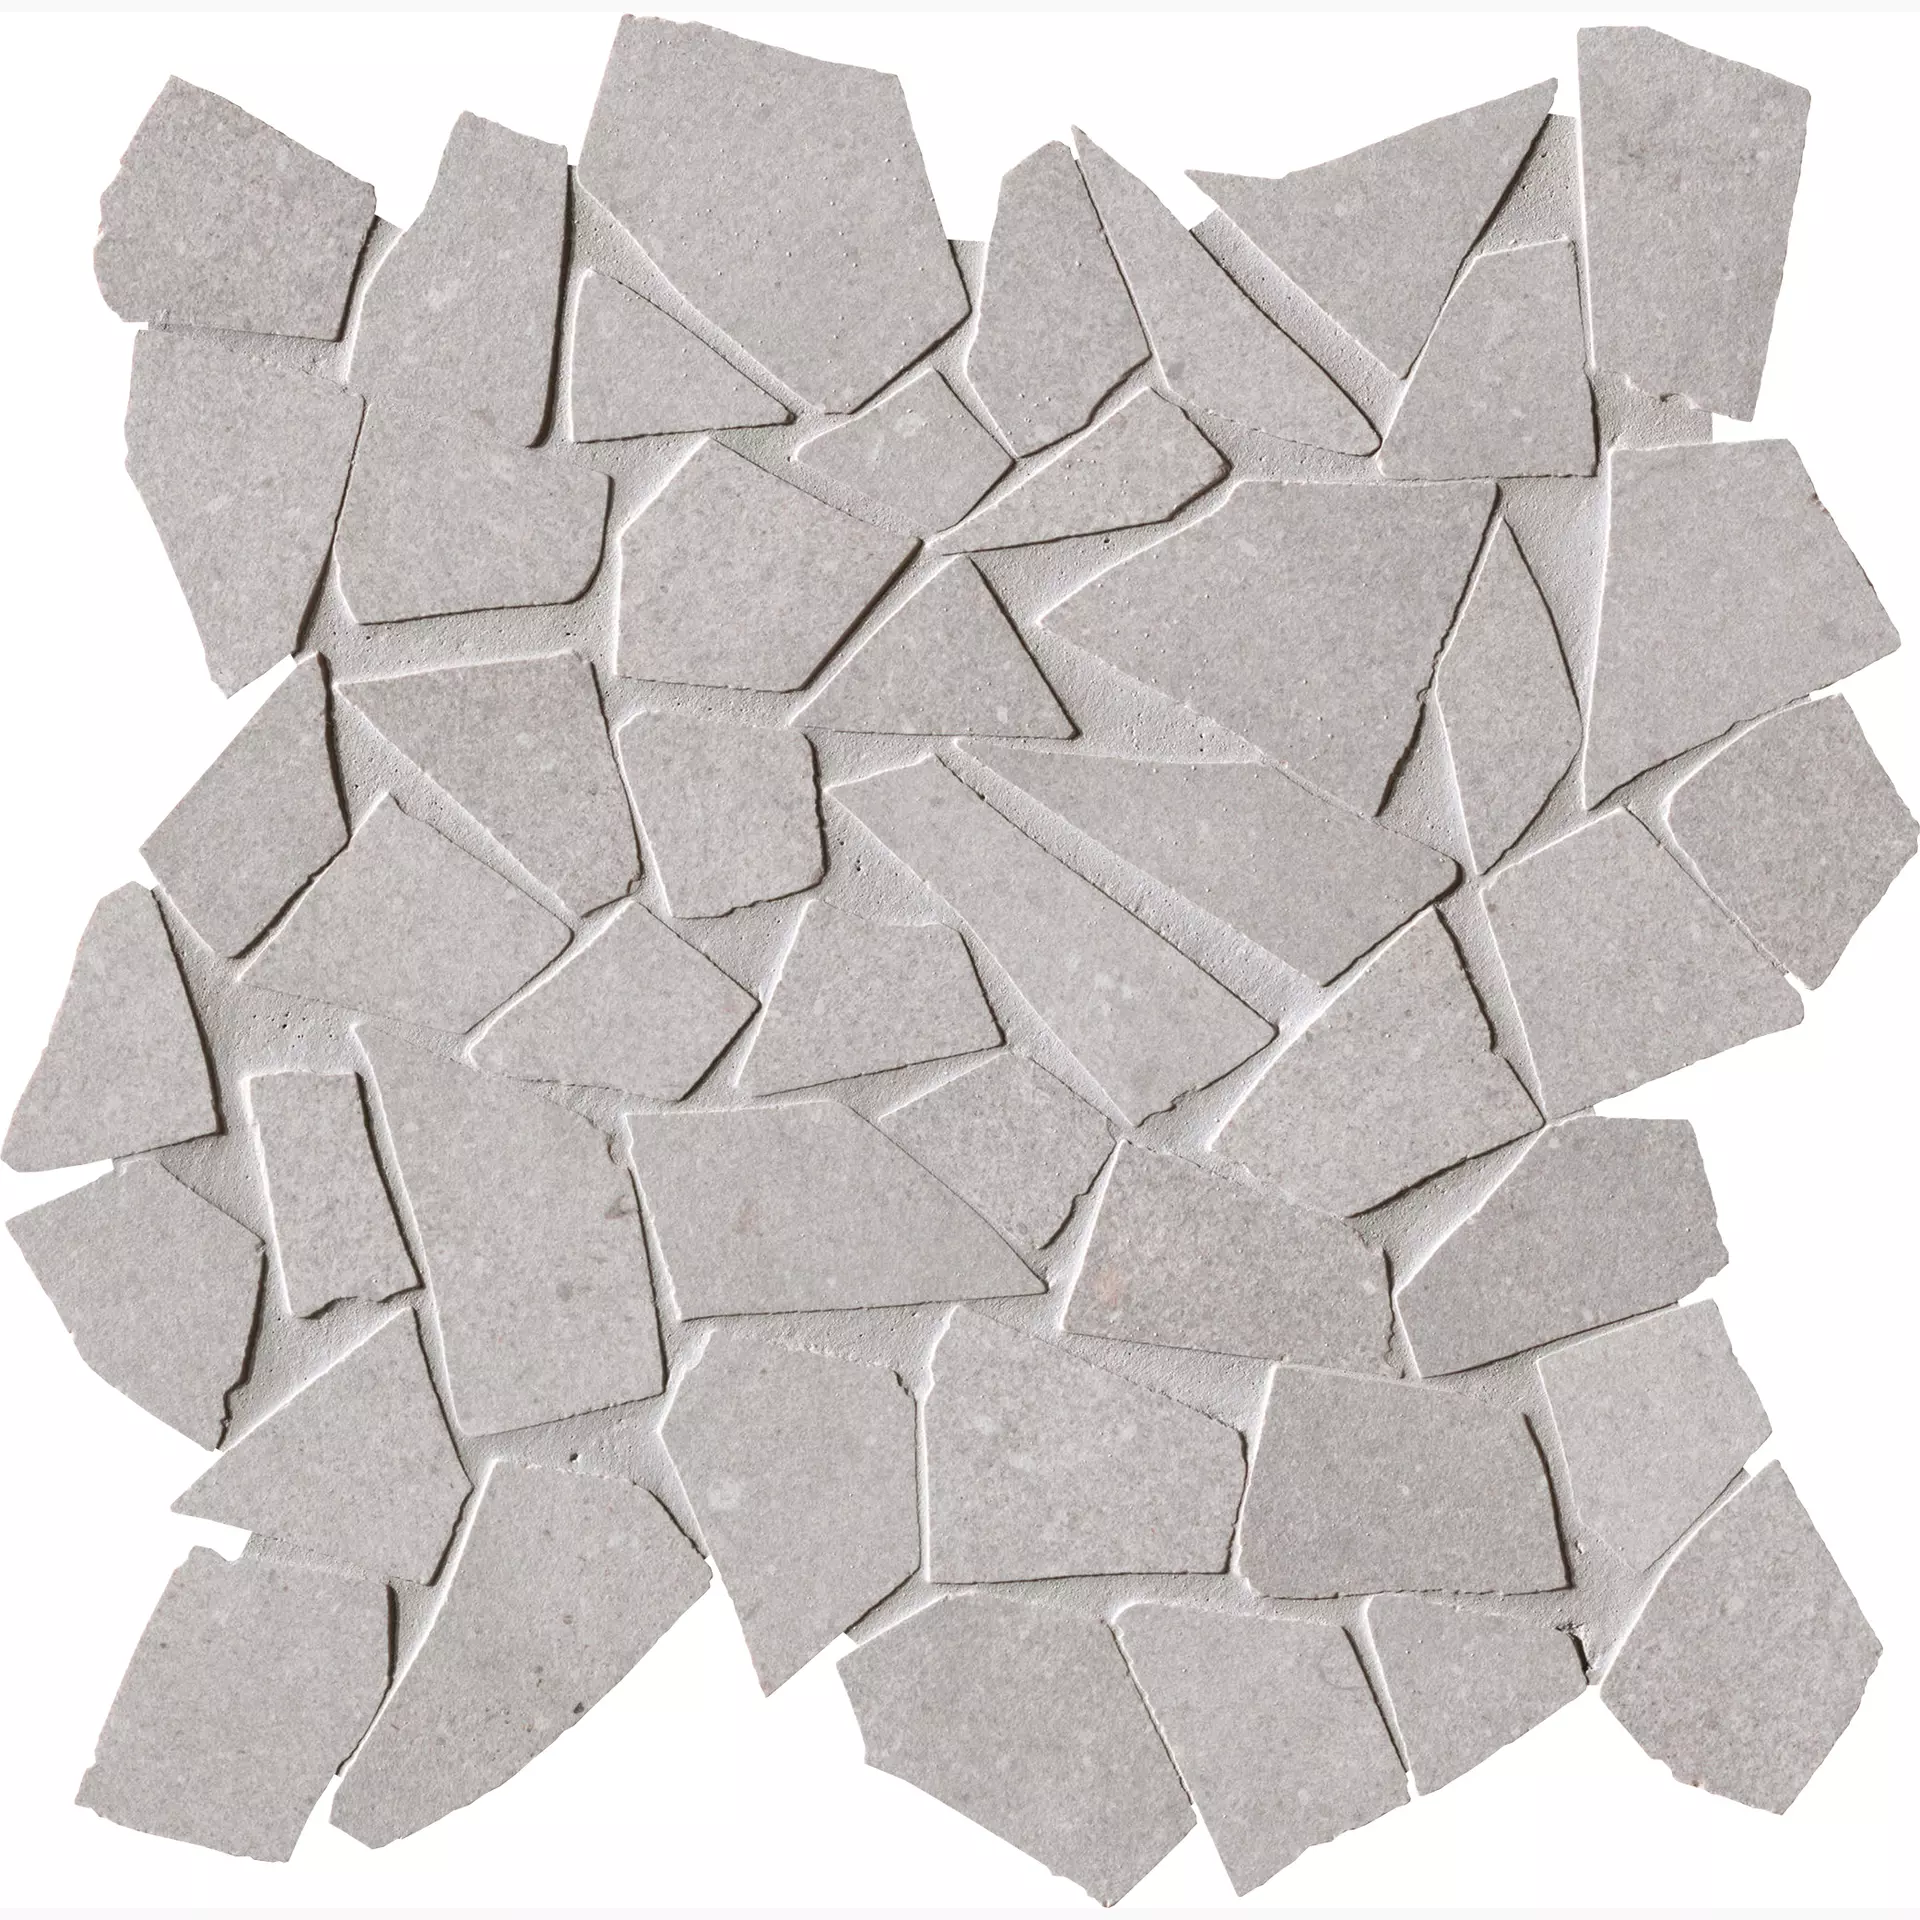 FAP Nux Grey Anticato Grey fOQO antiquiert 30x30cm Mosaik Schegge